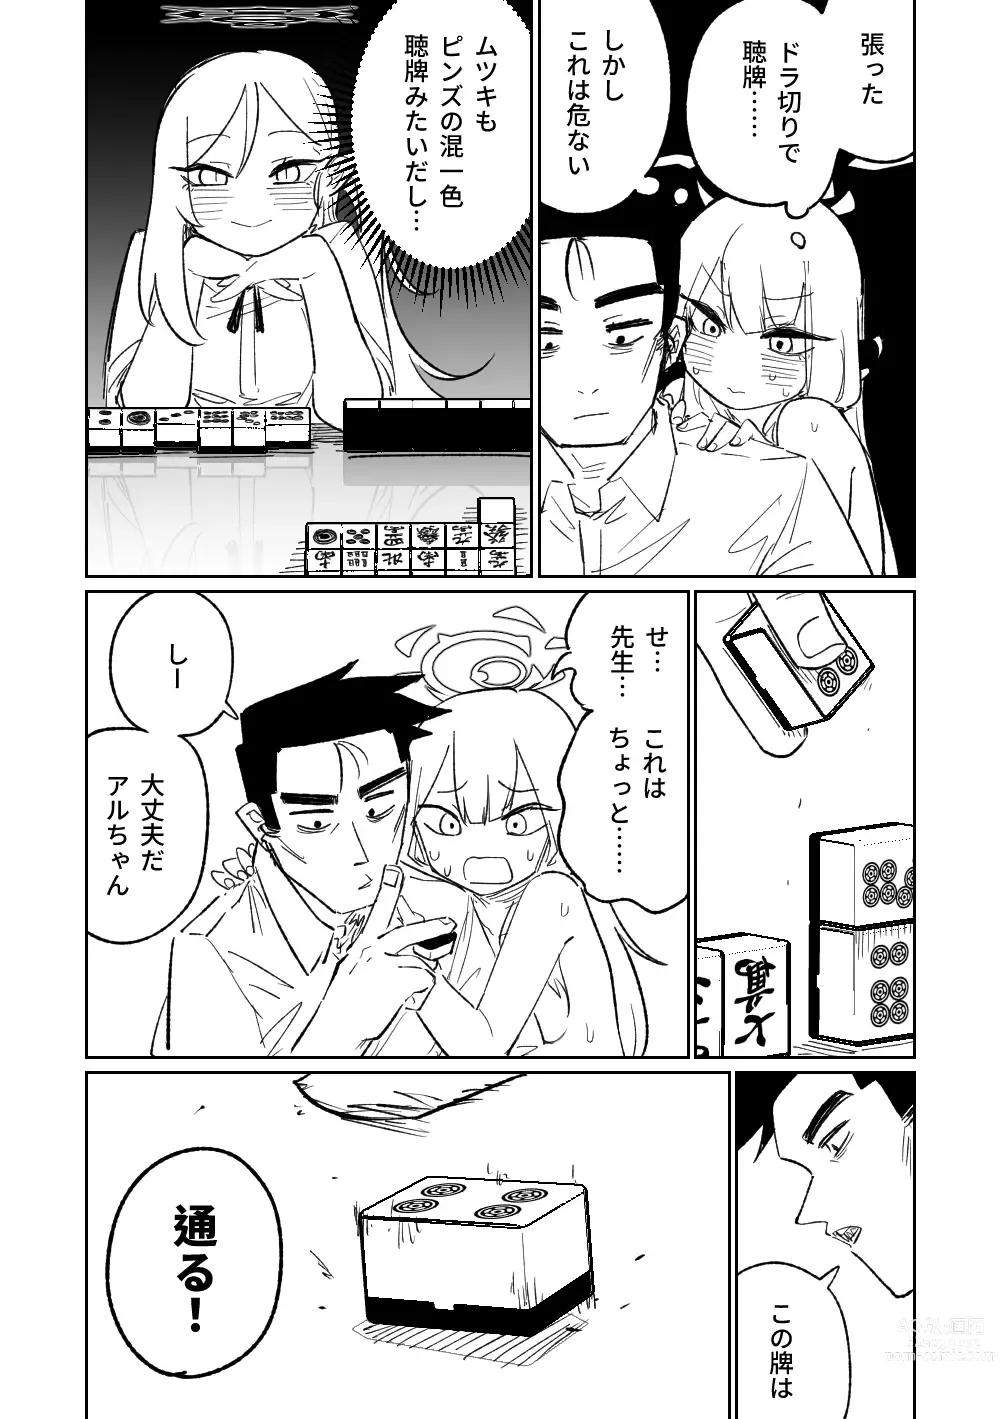 Page 11 of doujinshi Benriya 68 Datsui Mahjong Ichi ~Sankaisen~